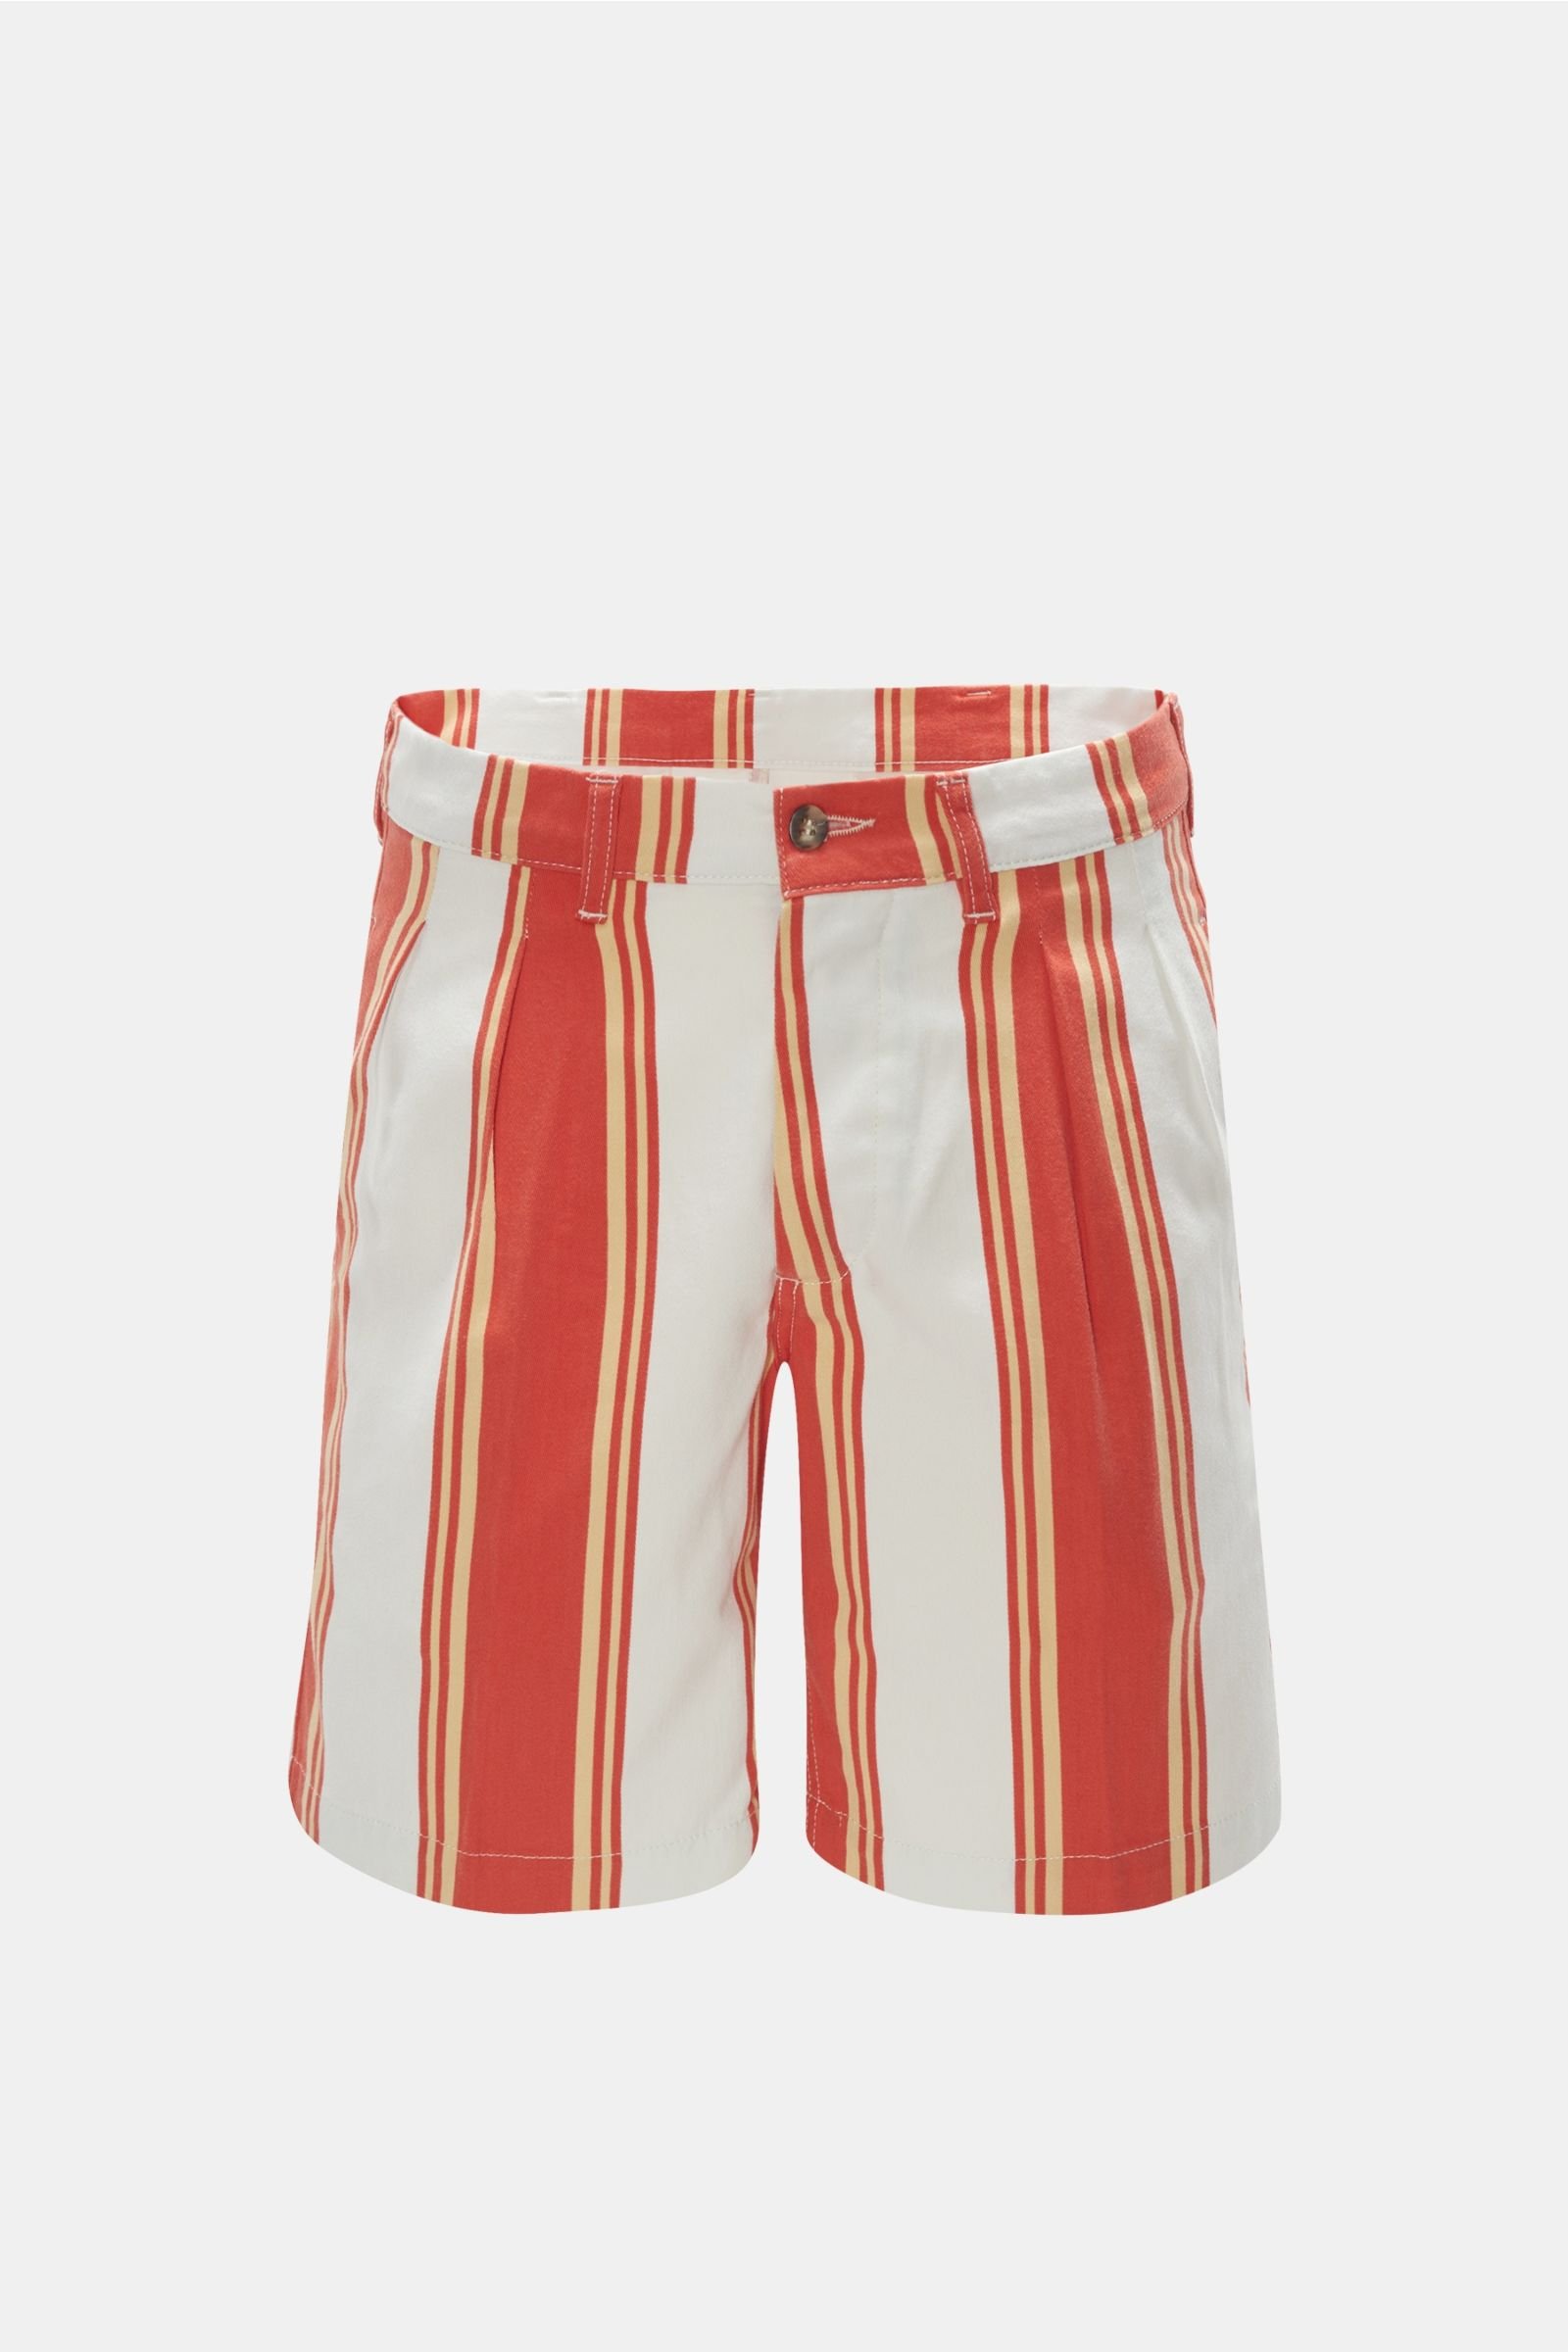 Bermuda shorts 'Aaza' orange/yellow/white striped